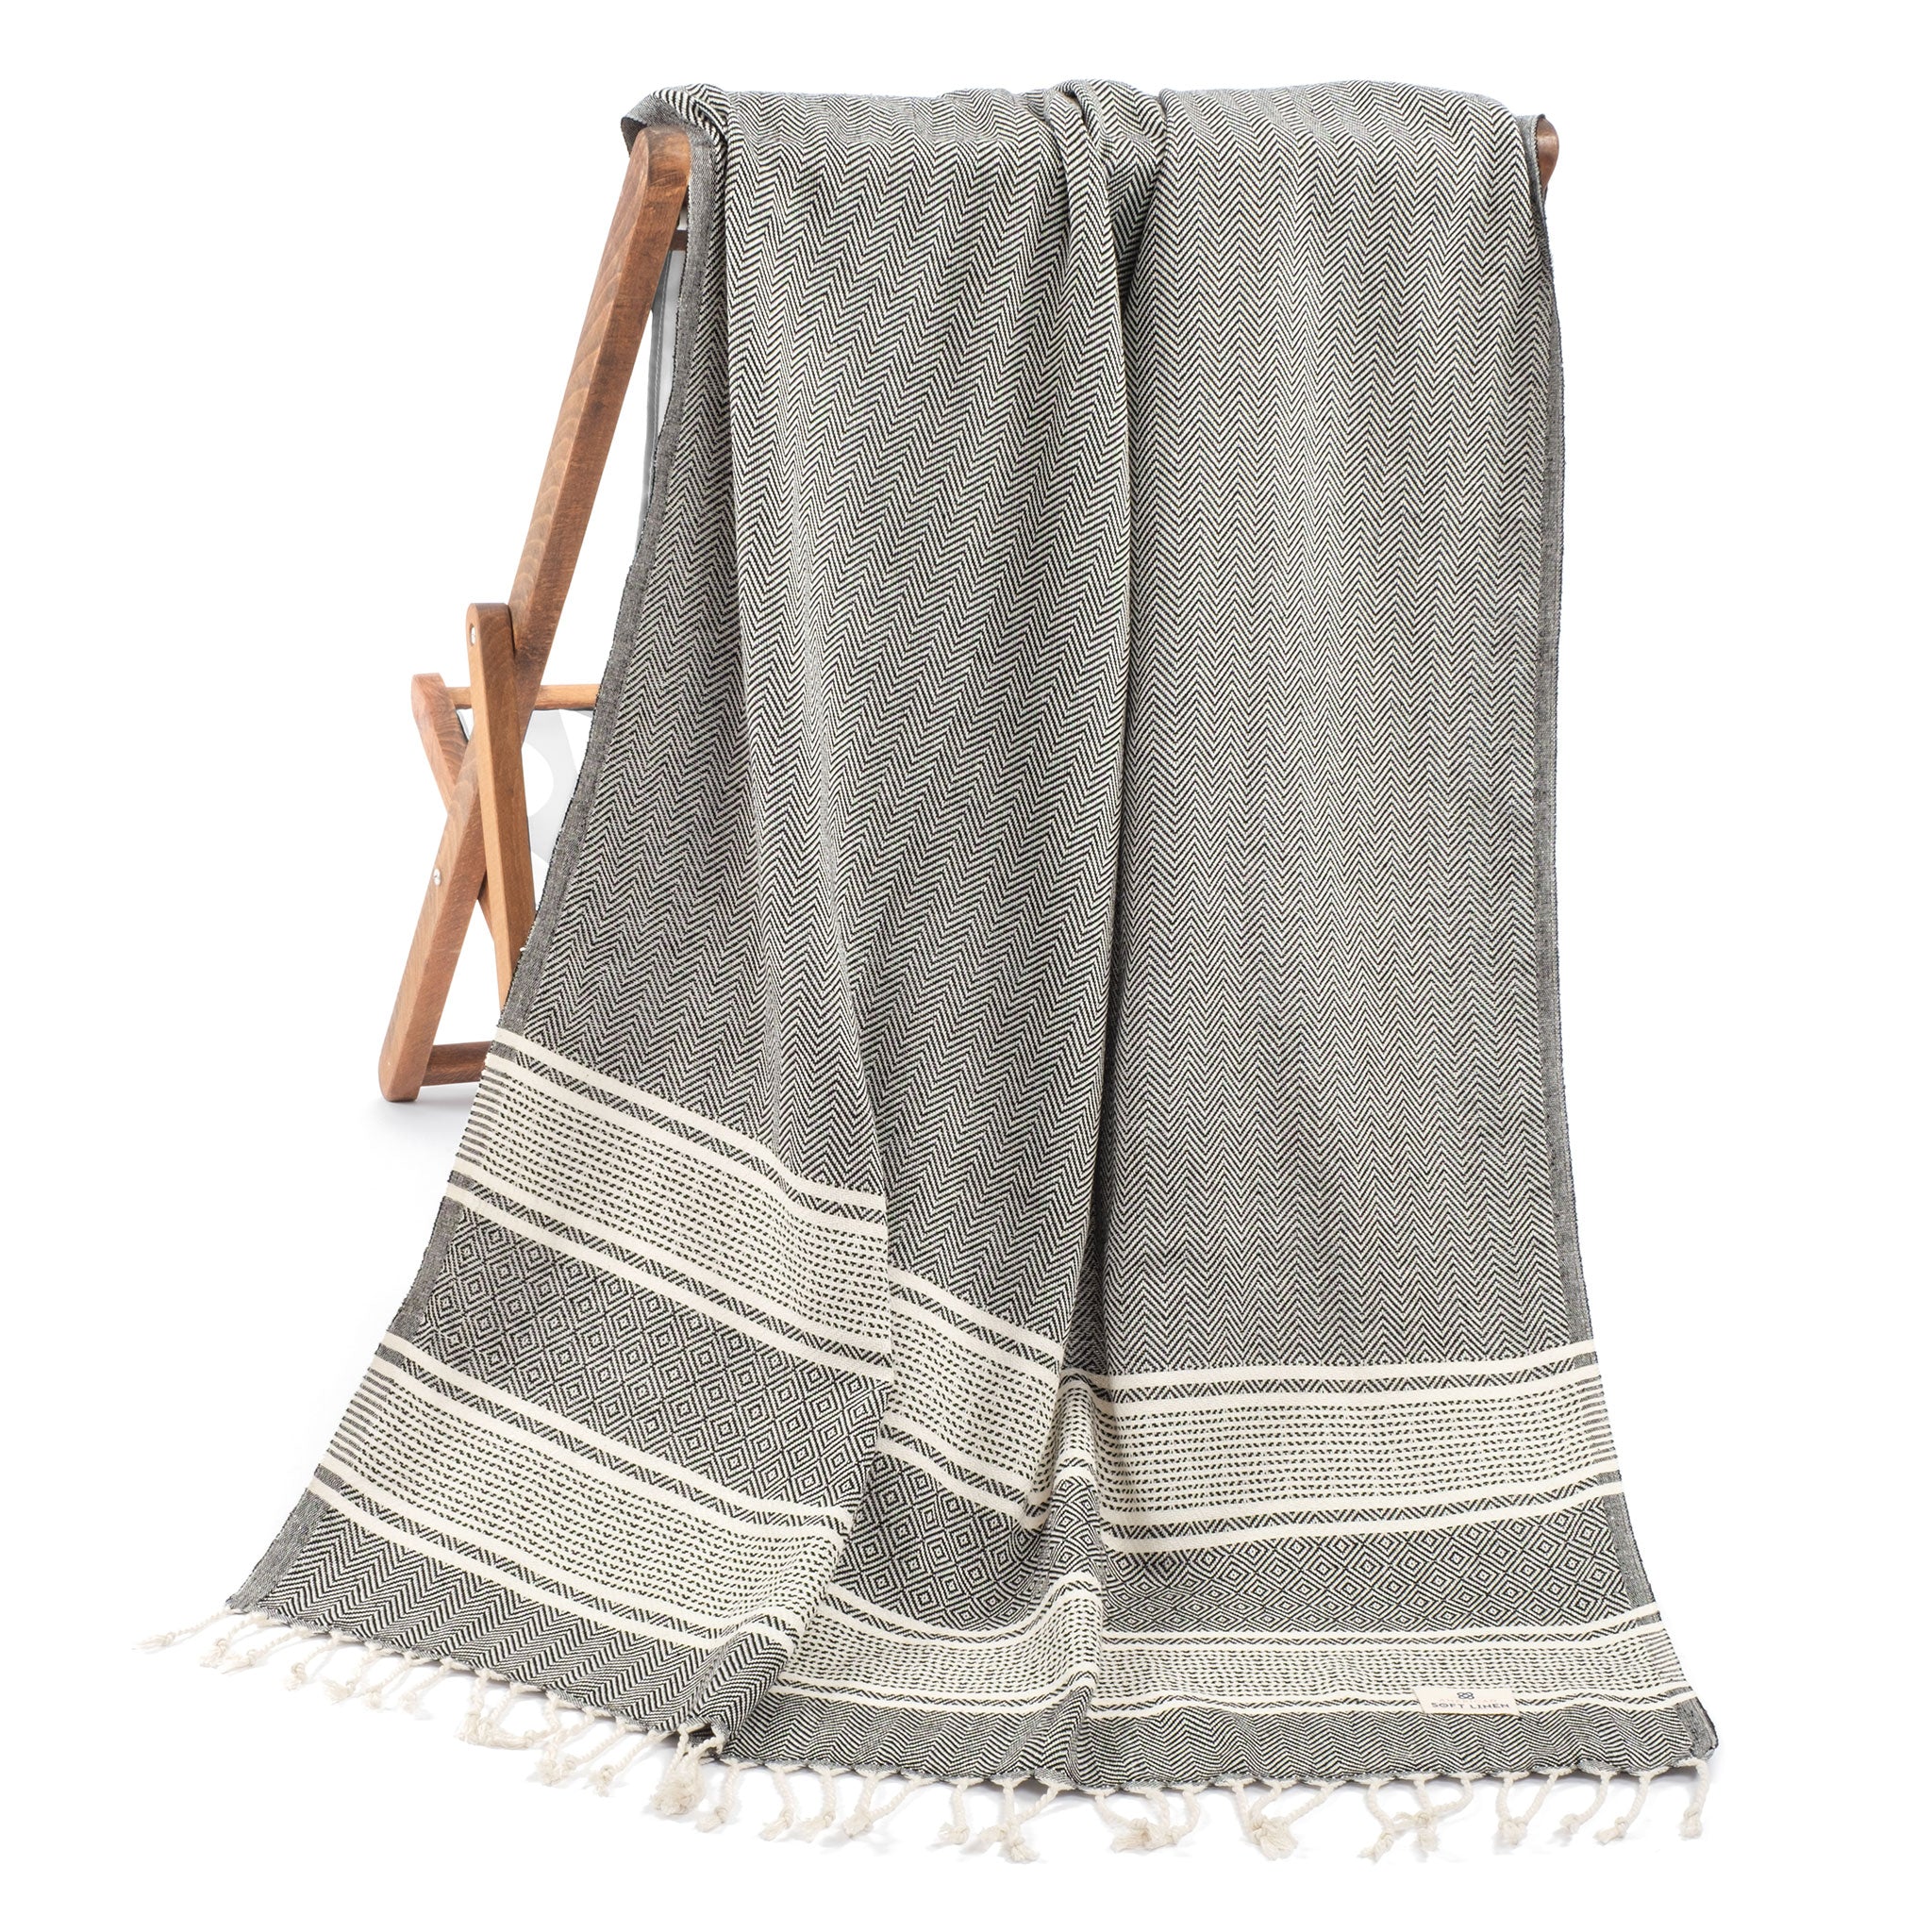 American Soft Linen - 100% Cotton Turkish Peshtemal Towels 40x70 Inches - Black-Striped - 1